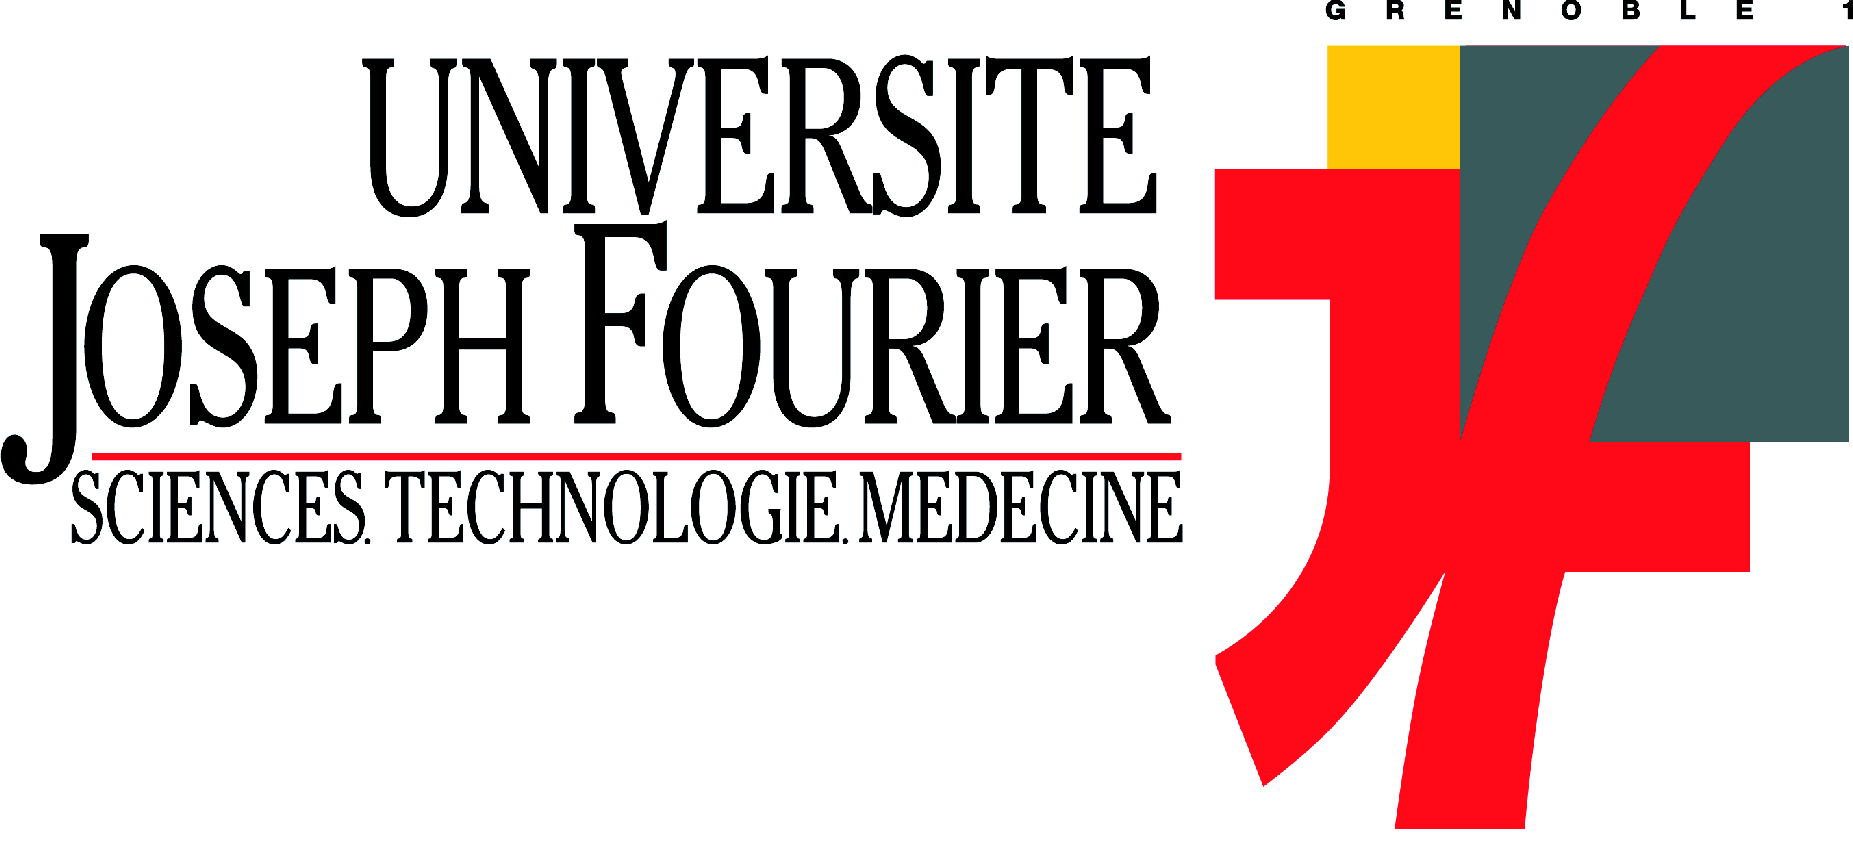 UJF Grenoble 1 logo